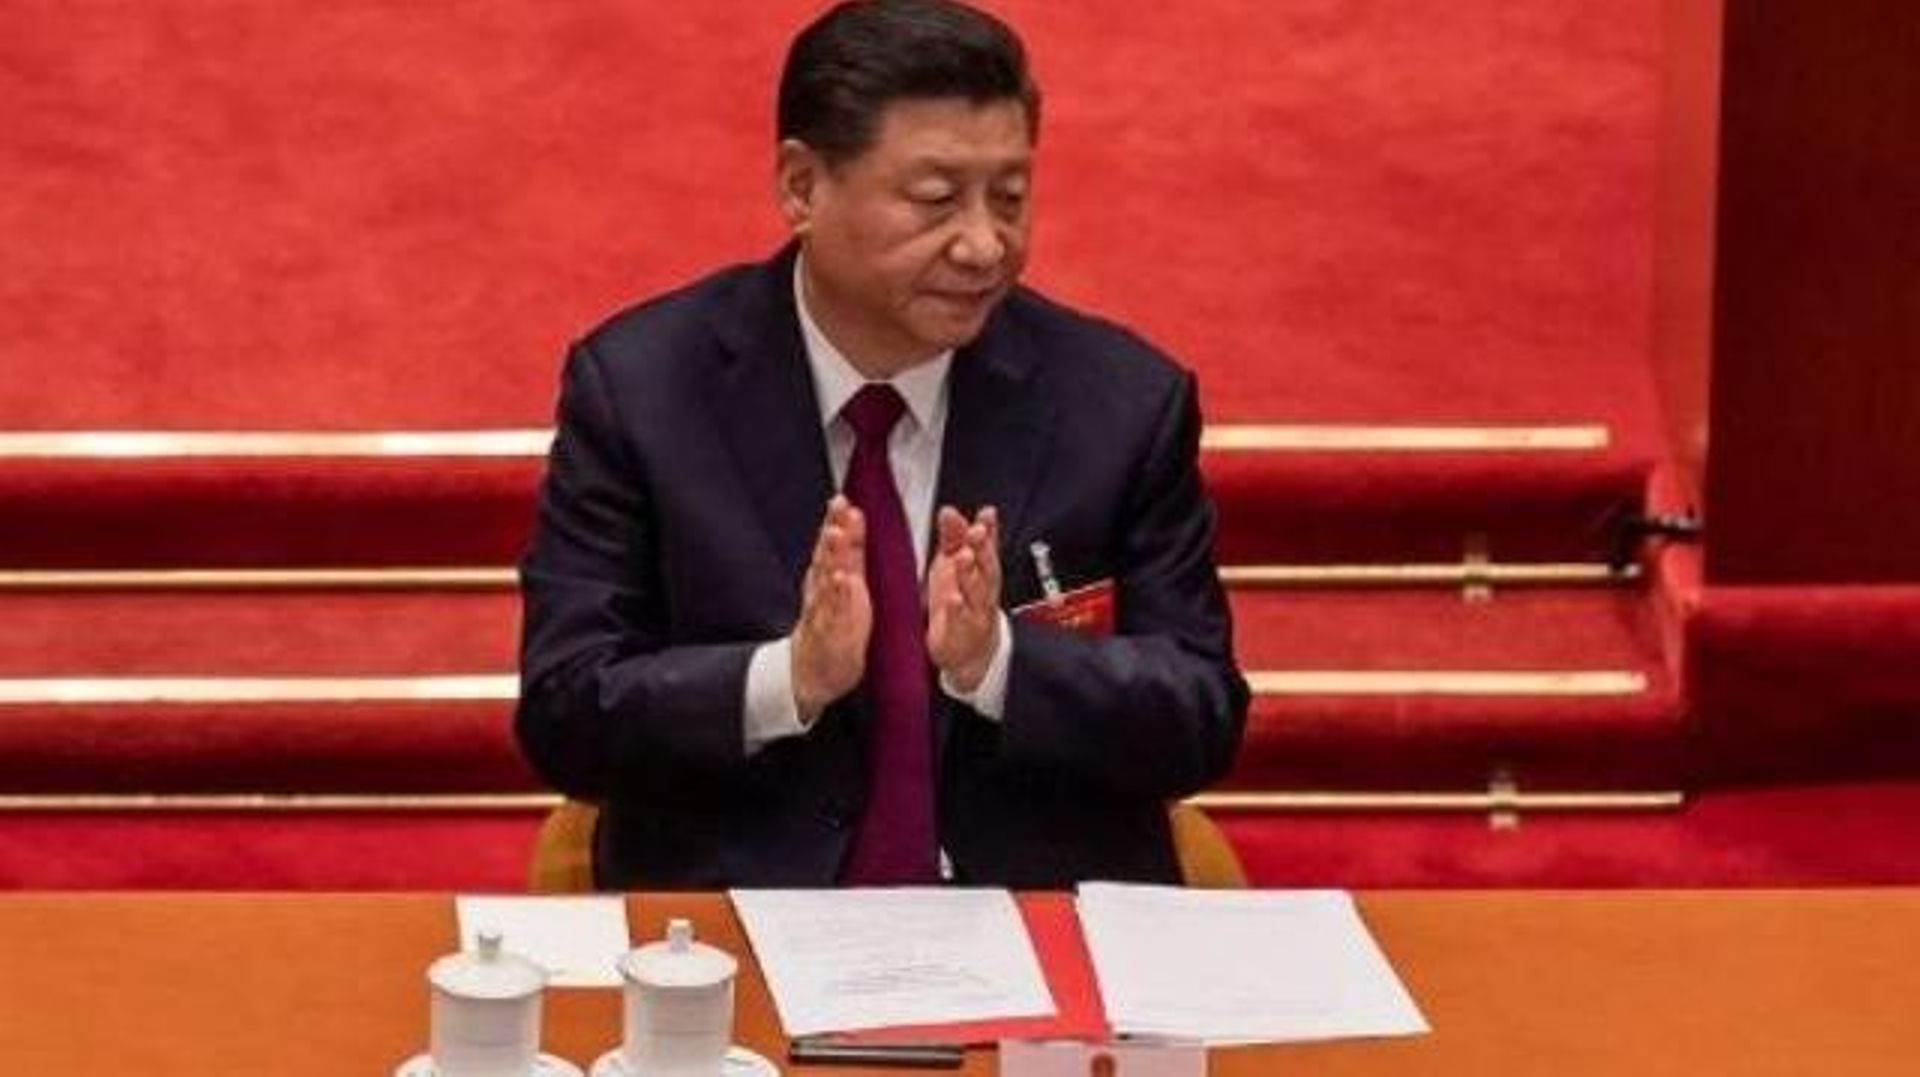 le-president-chinois-xi-jinping-exprimant-l-espoir-d-une-cooperation-a-angela-merkel